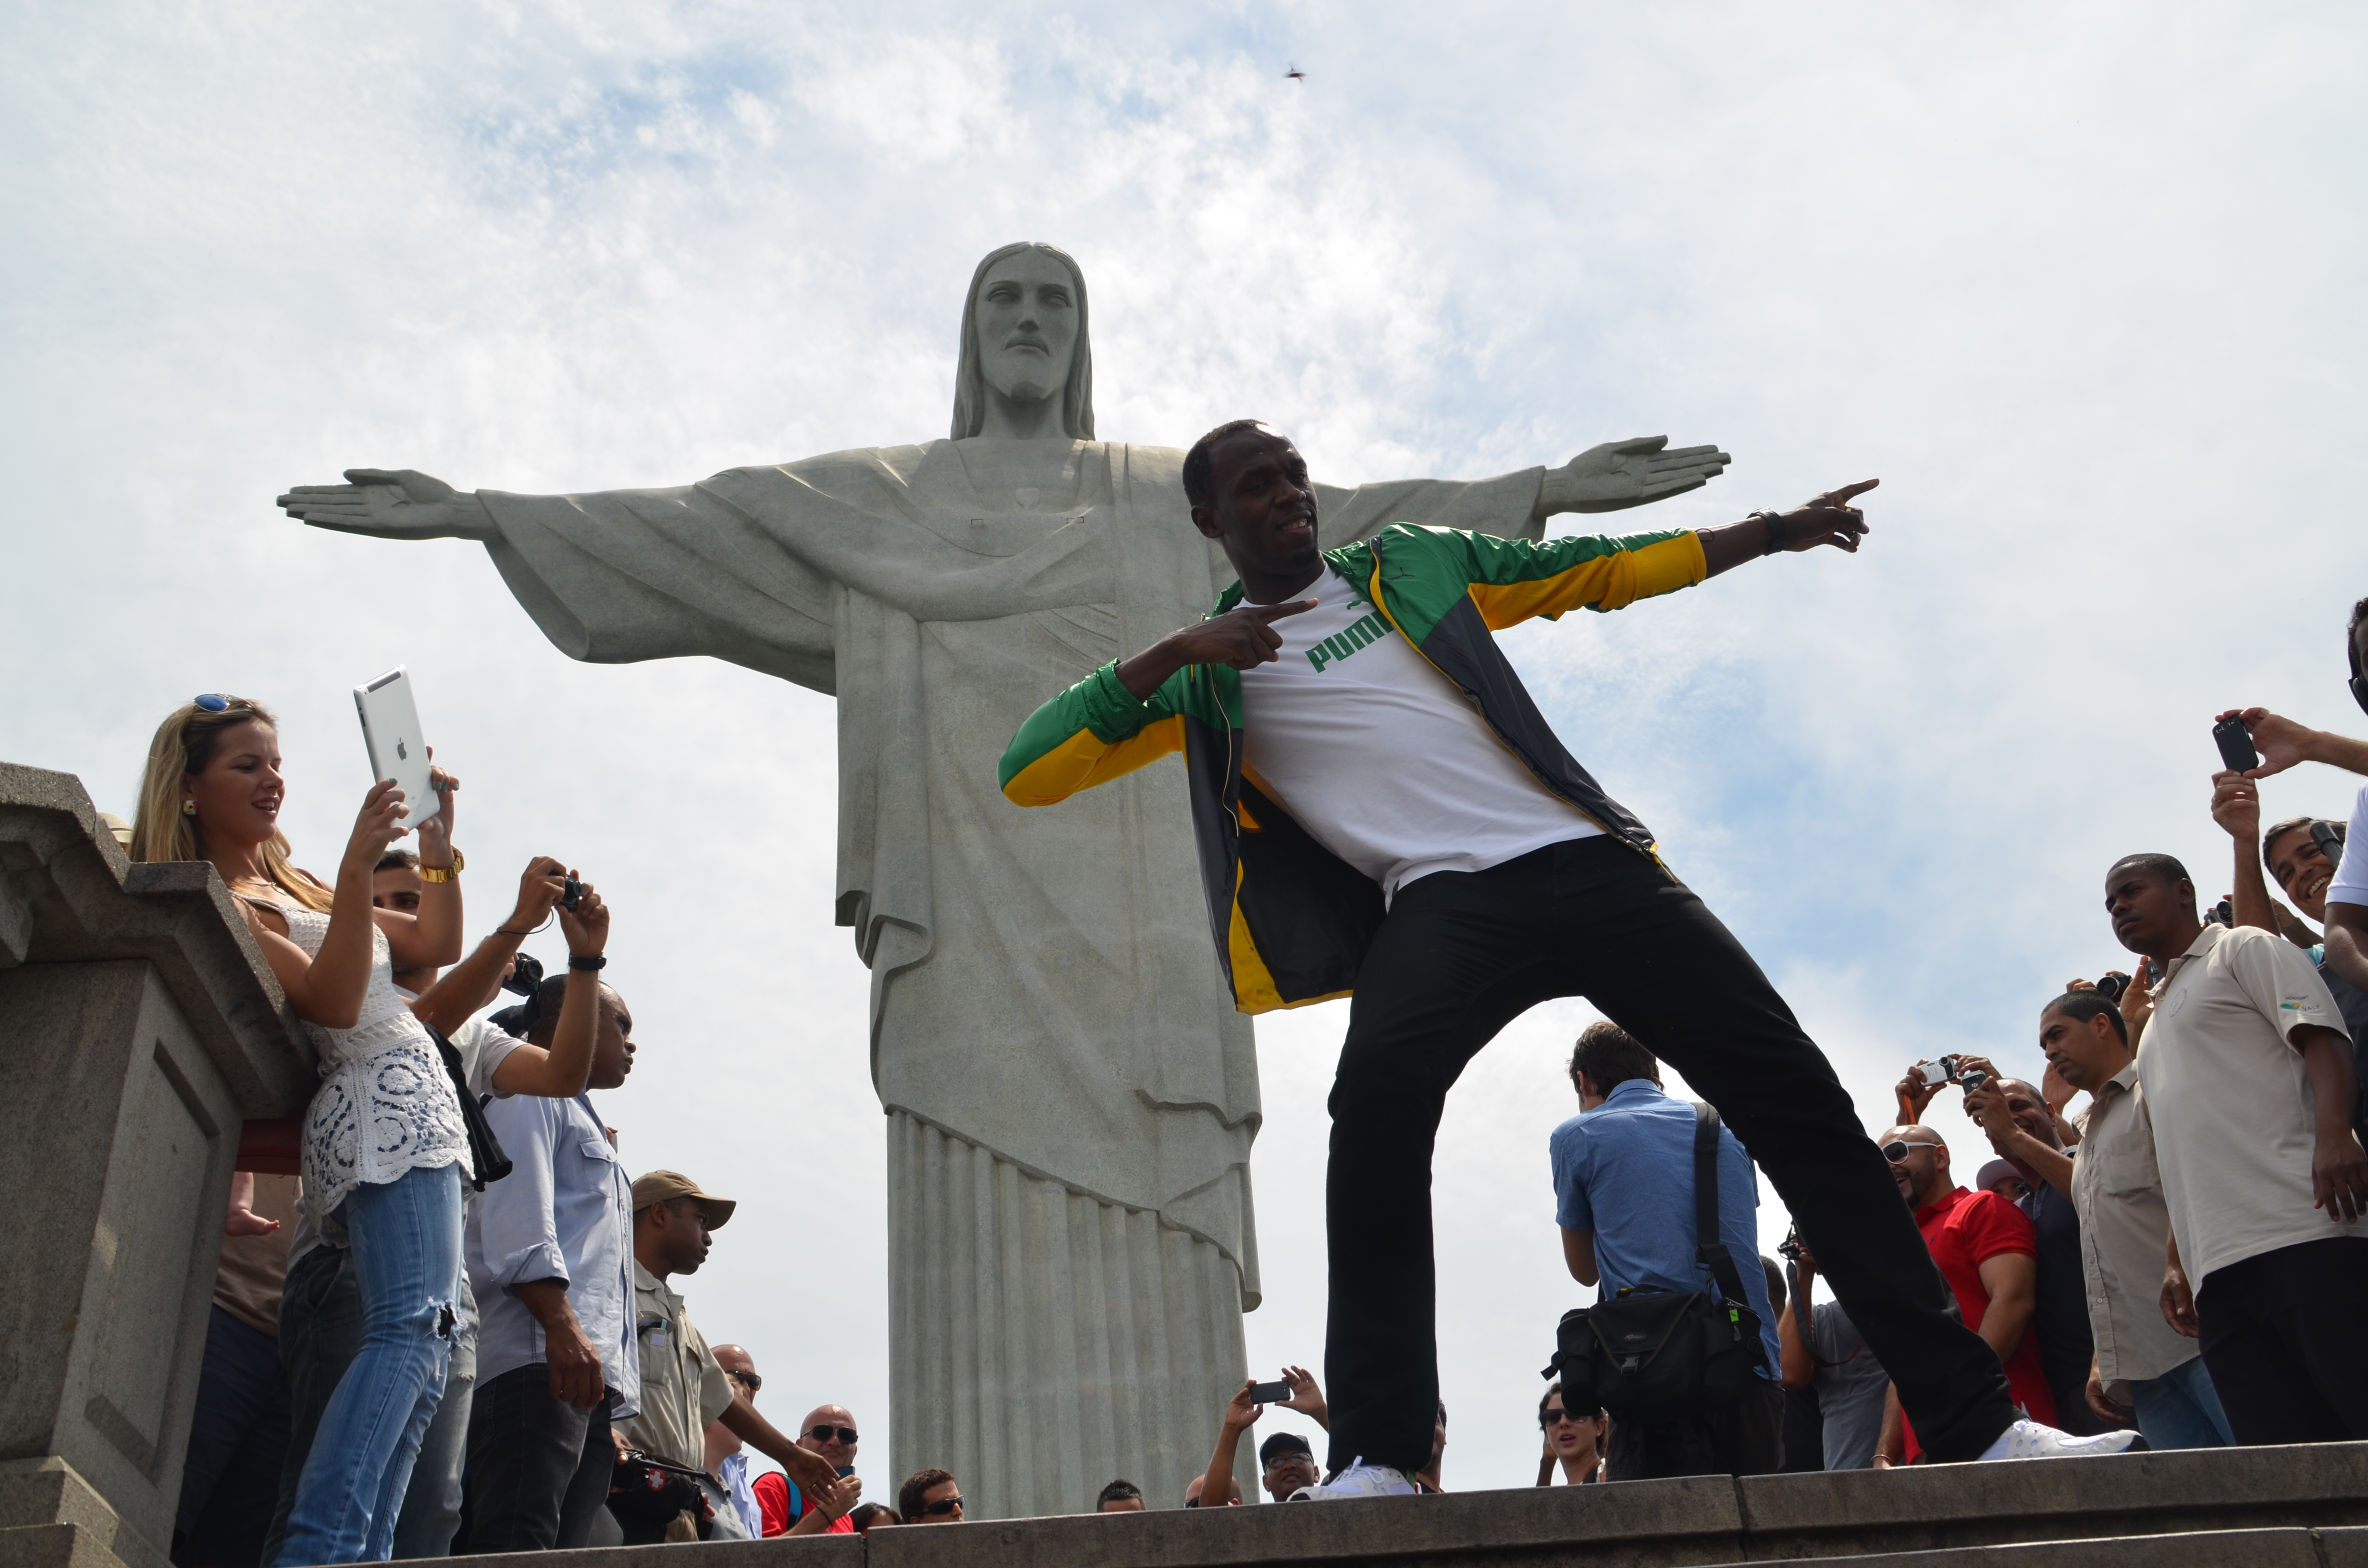 Usain Bolt to run 150m race on Copacabana beach